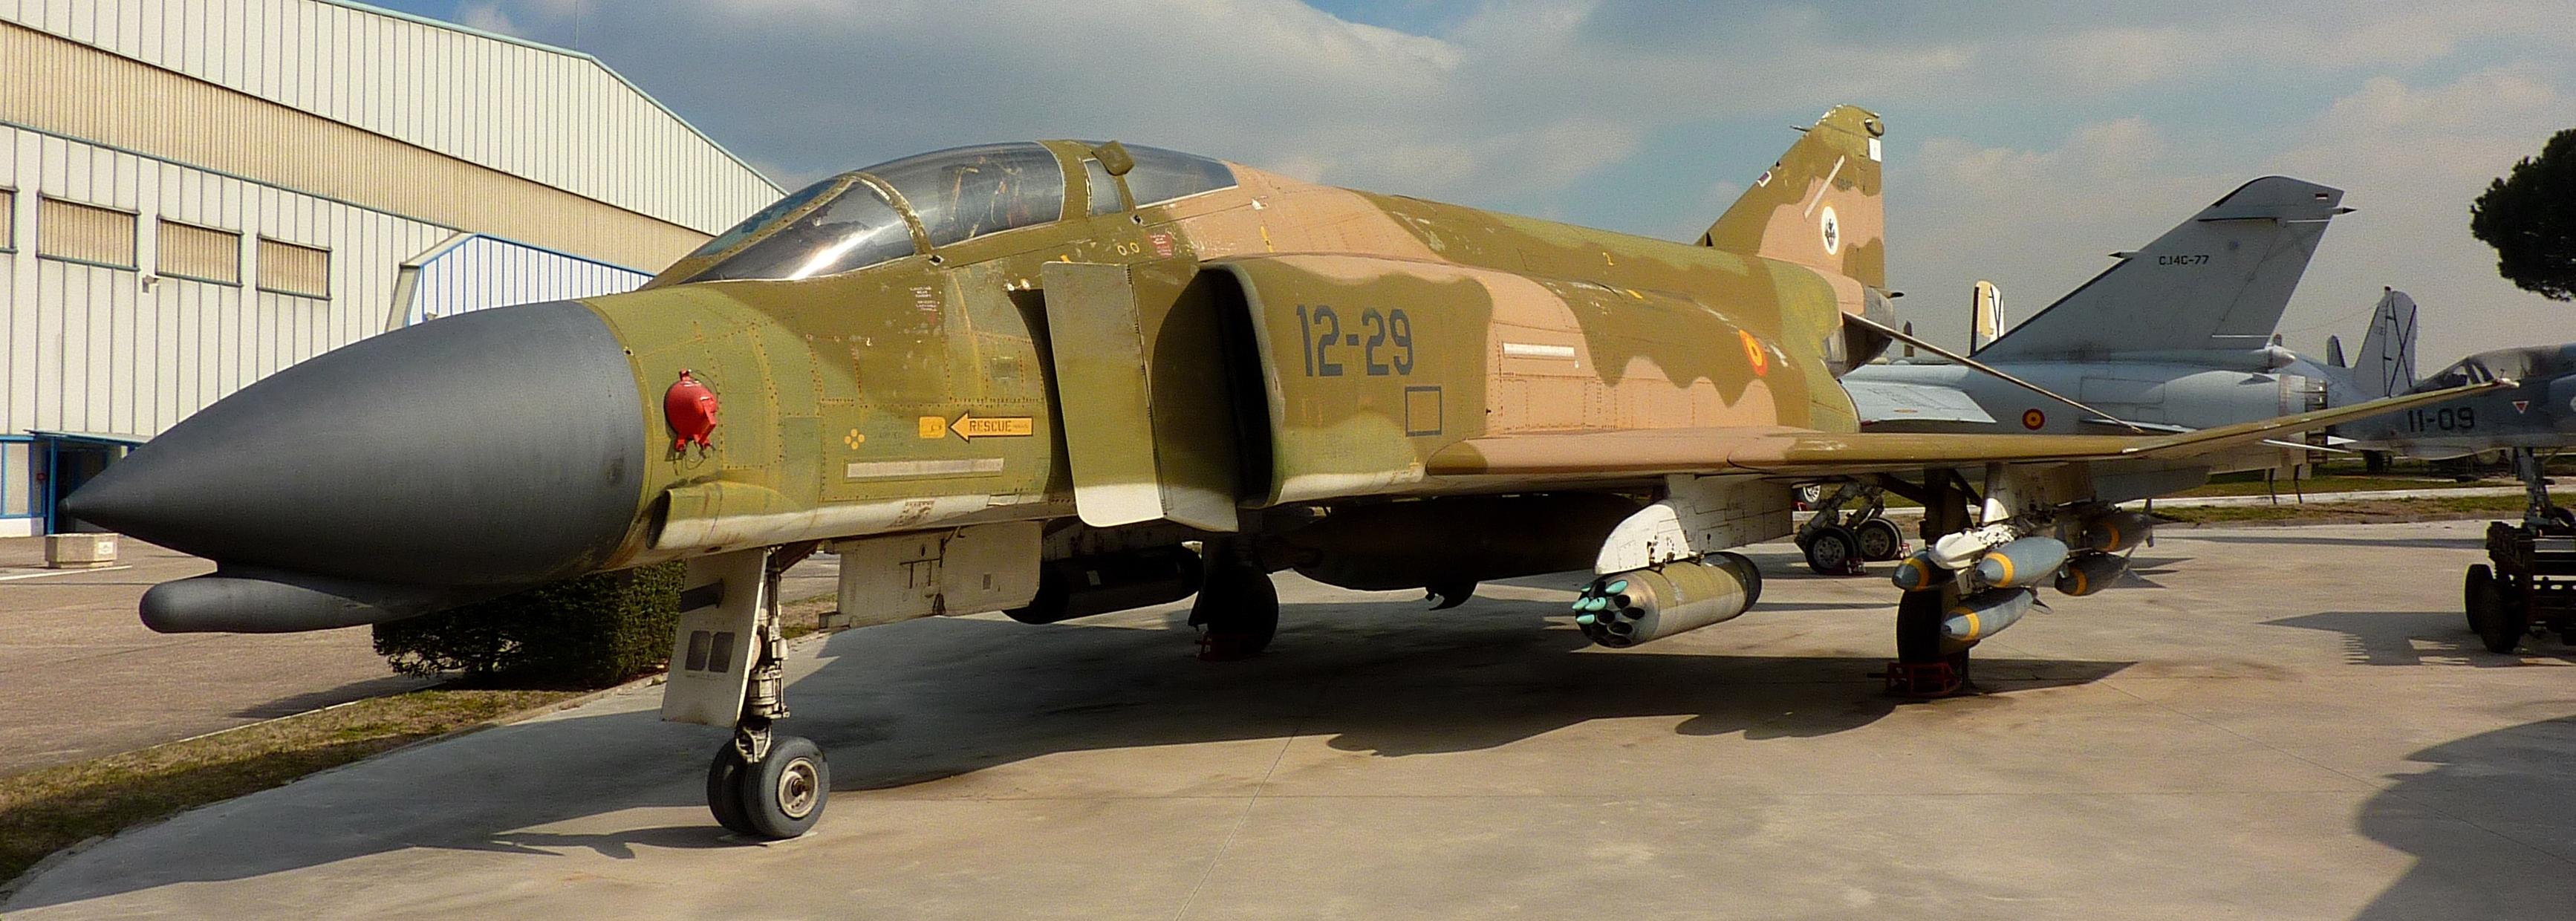 Copy of spanish air force f-4c at the cuatro vientos air museum (madrid). photo